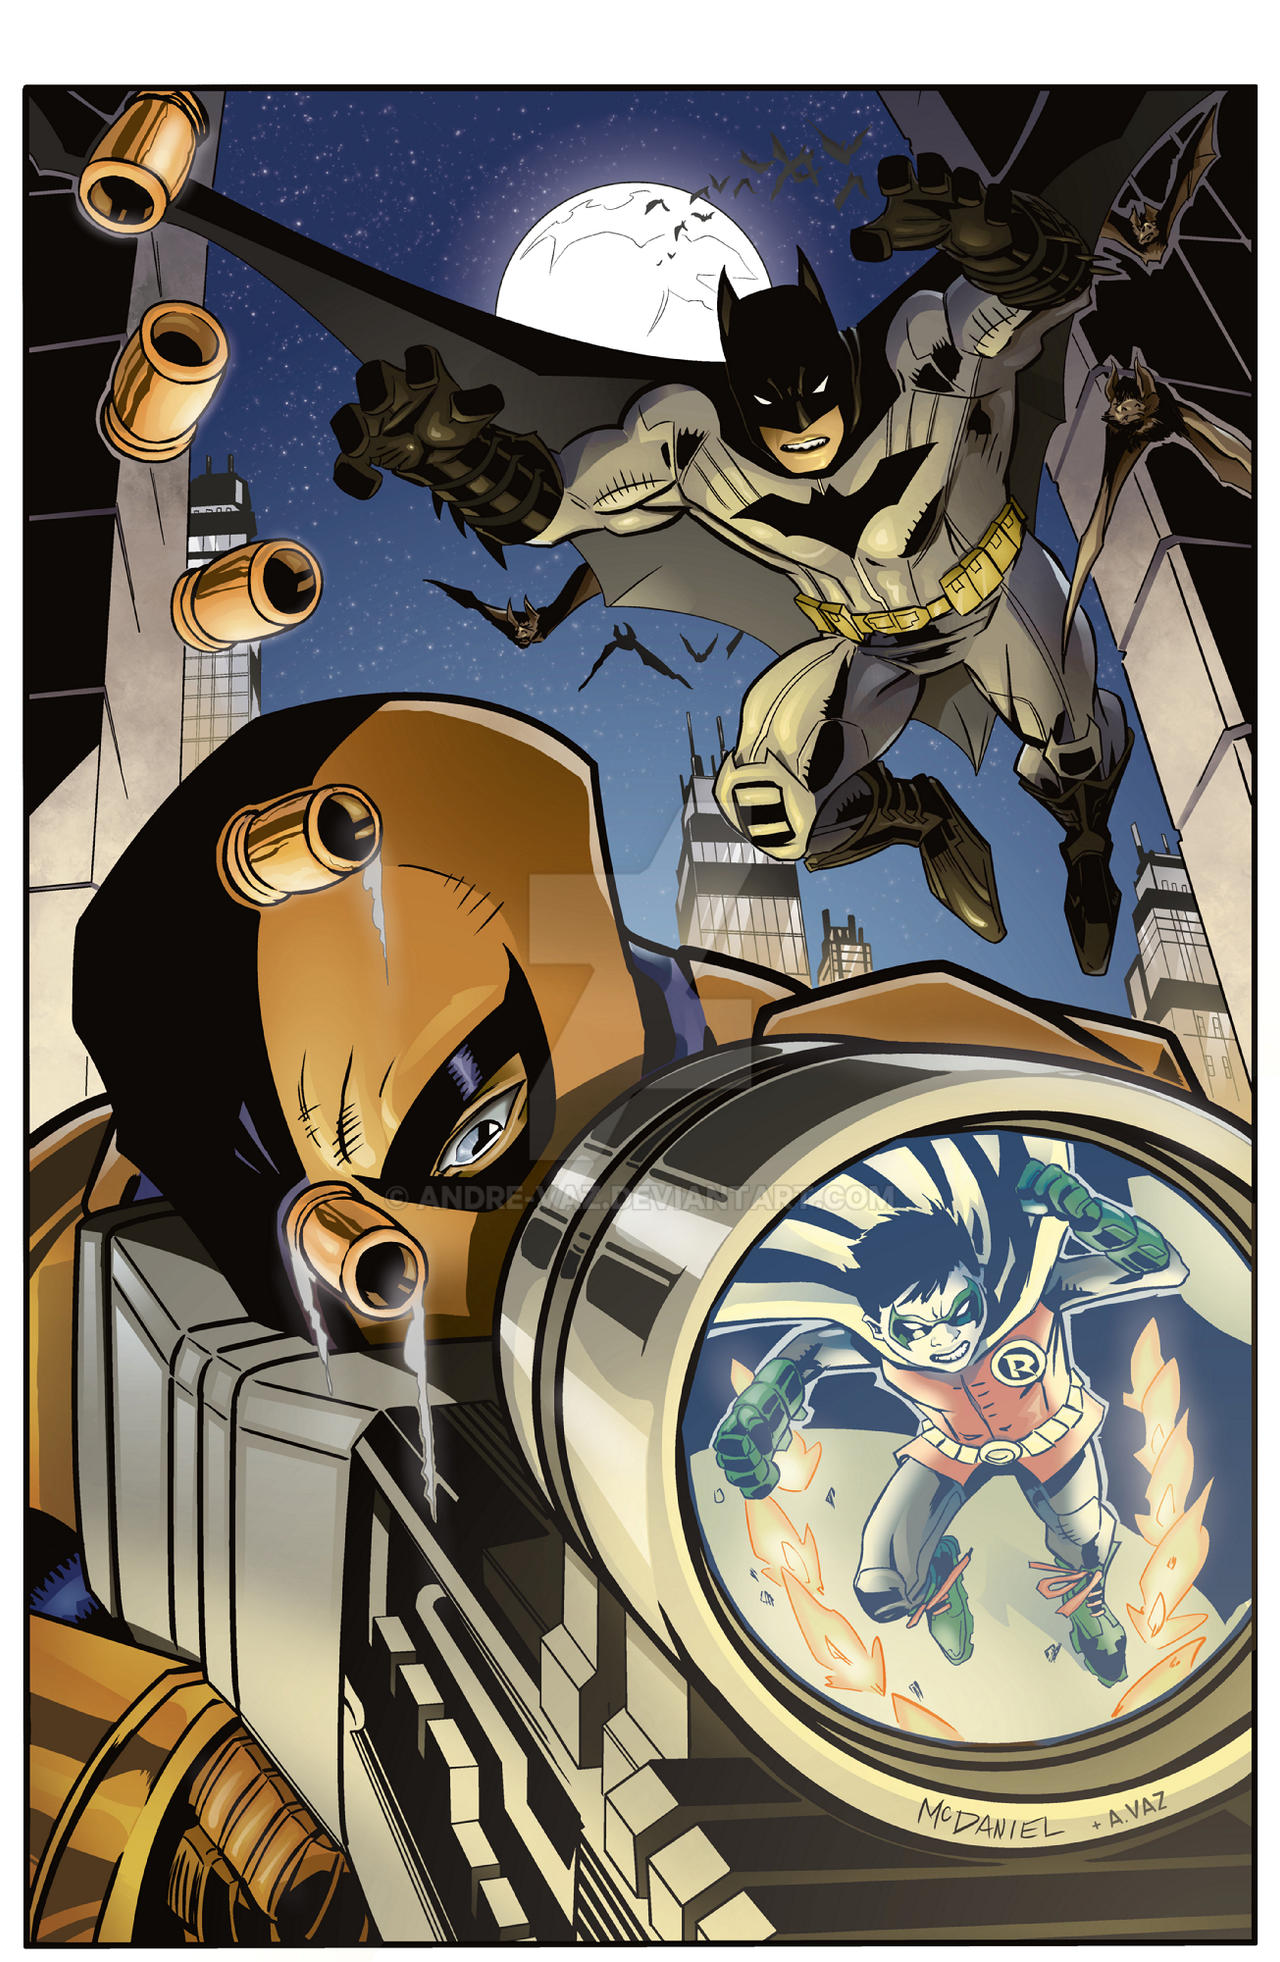 Batman Commission by Scott McDaniel - Inks Colors